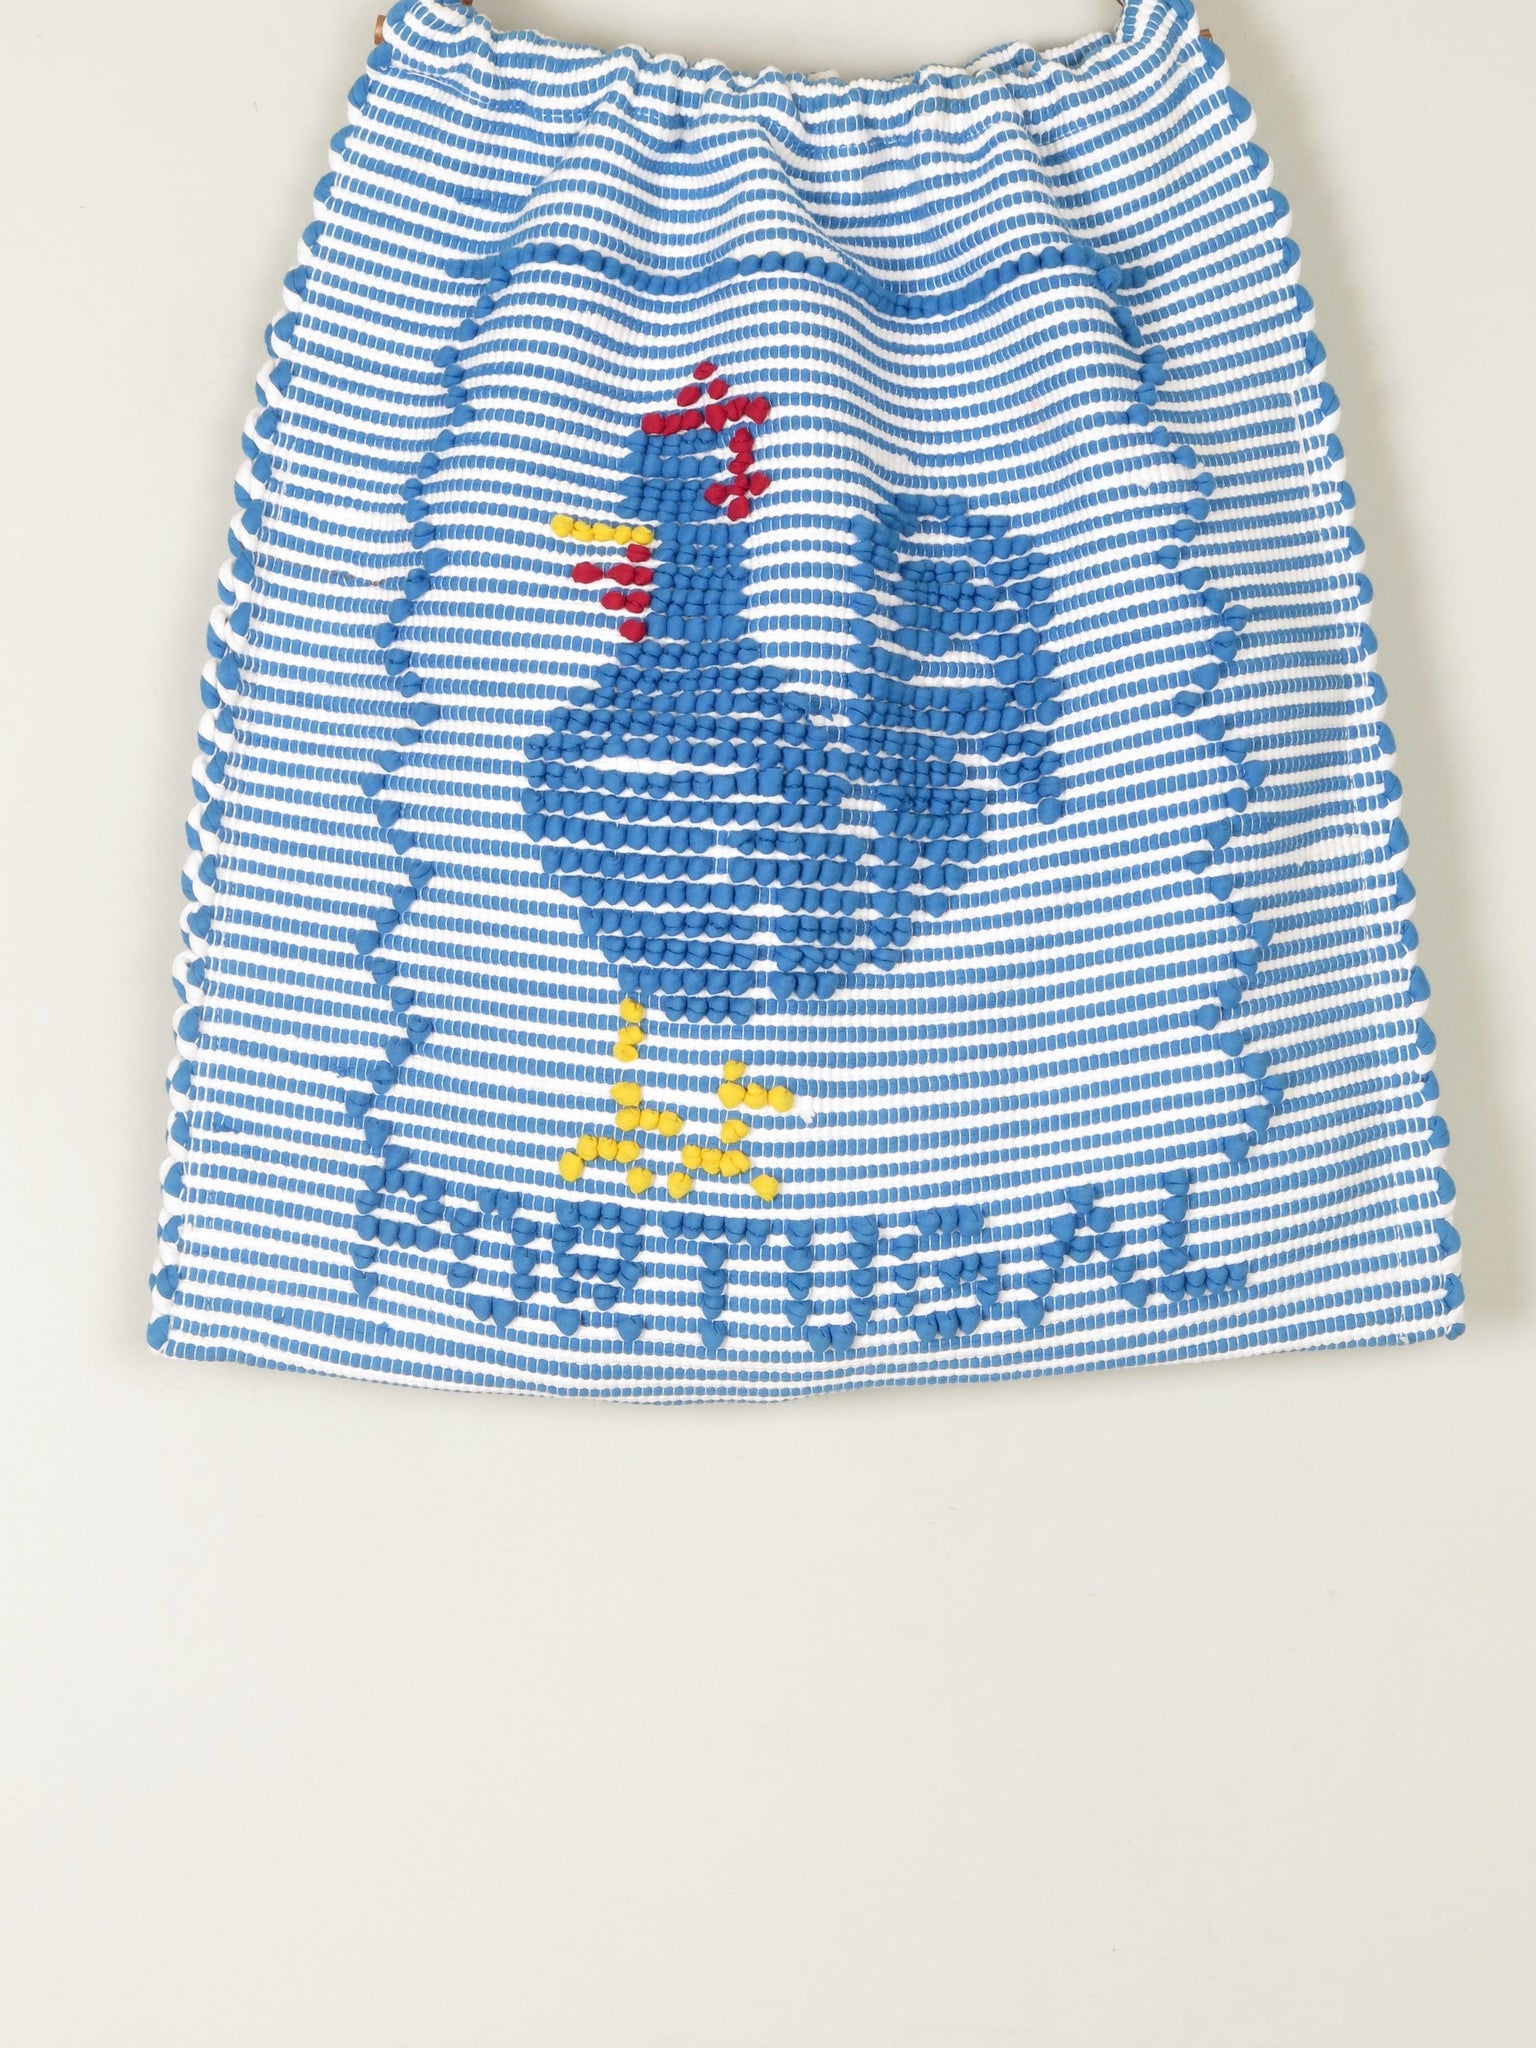 Blue Vintage Cotton Portugal Striped Embroidered Bag - The Harlequin